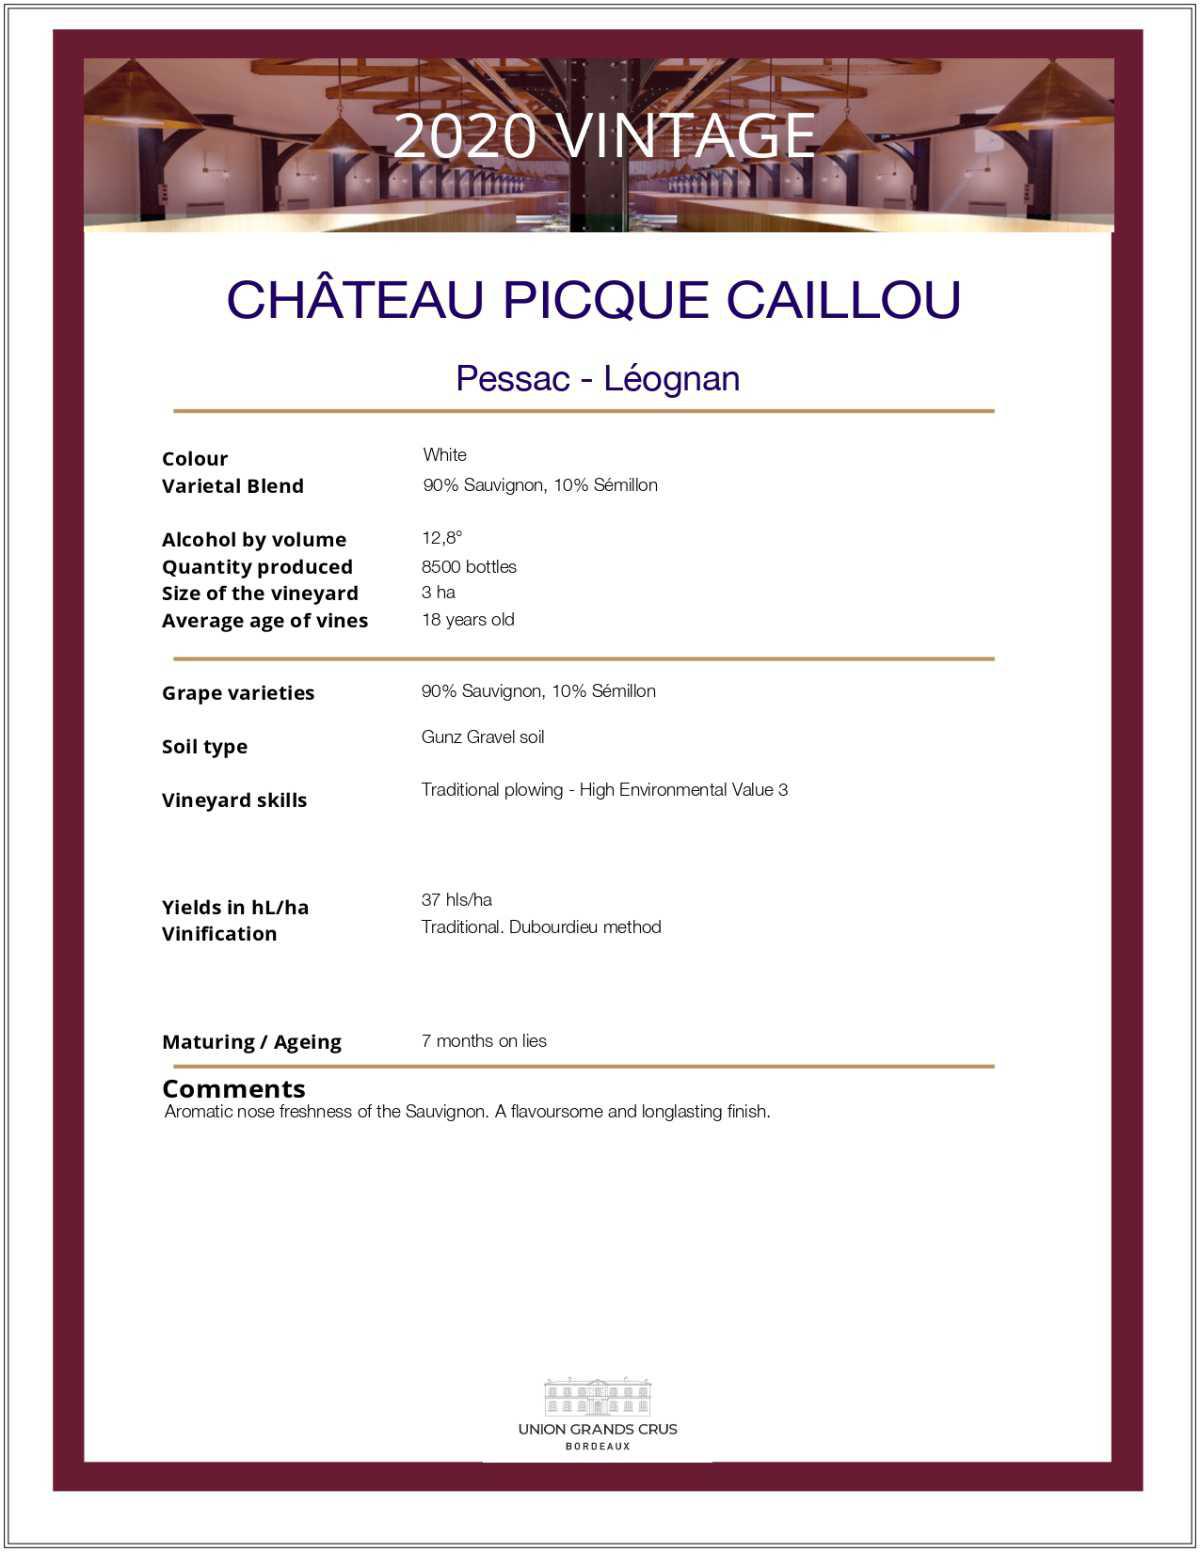 Château Picque Caillou - White